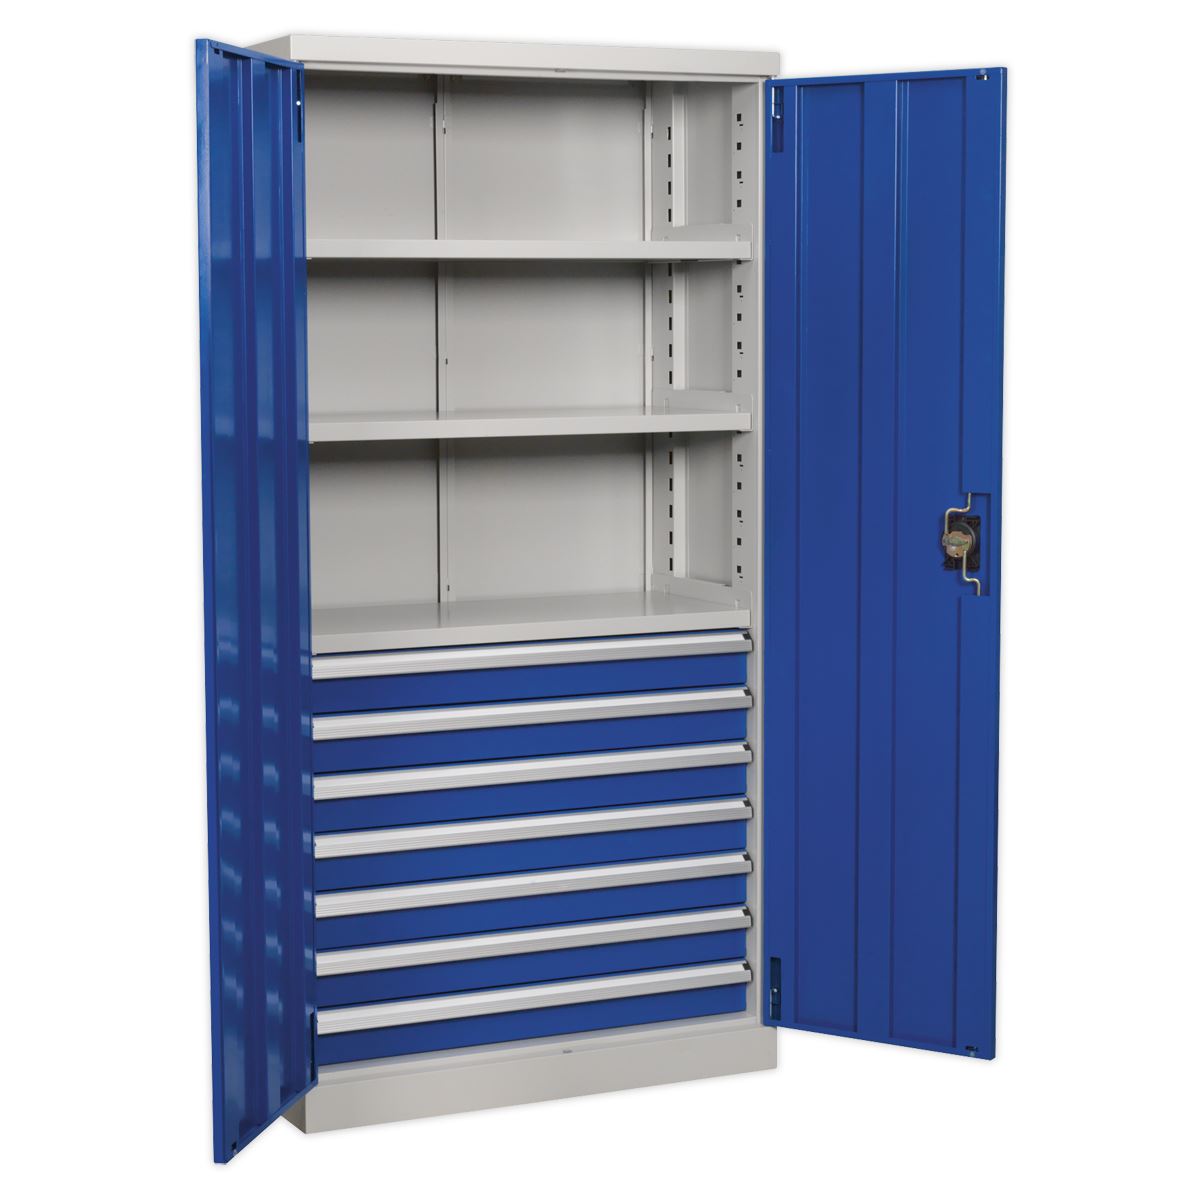 Sealey Premier Industrial Industrial Cabinet 7 Drawer 3 Shelf 1800mm